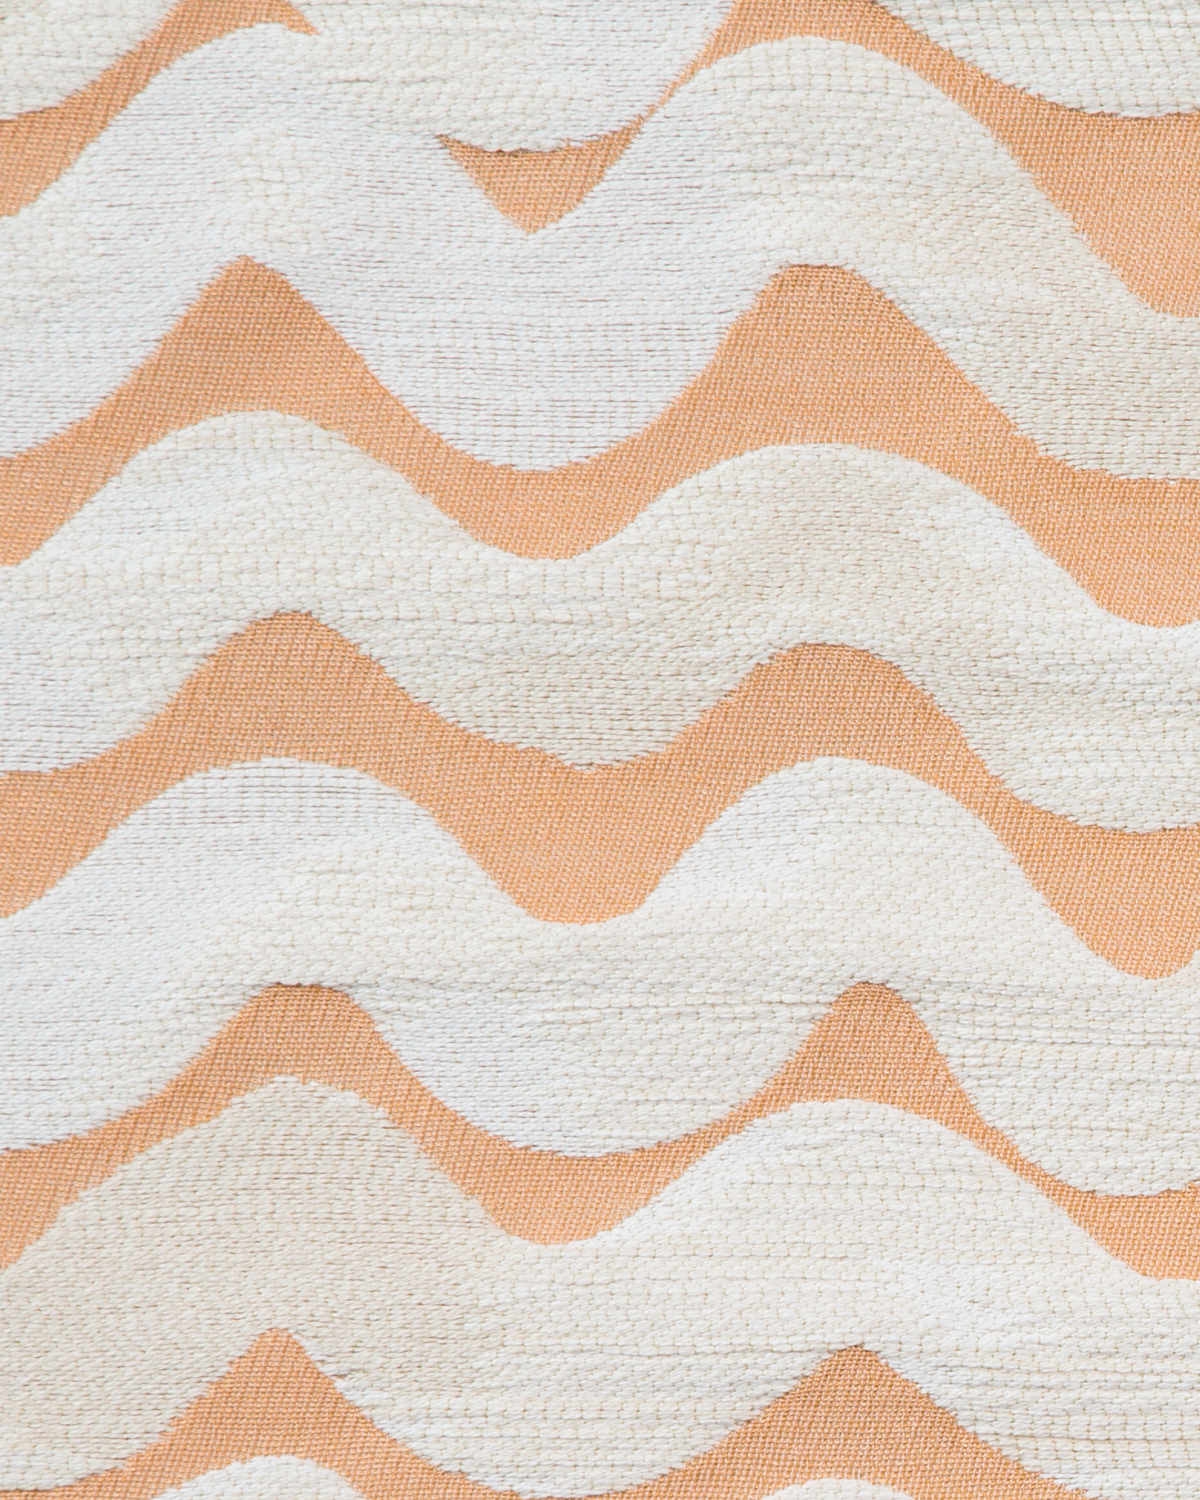 Tidal Wave Fabric in Peach